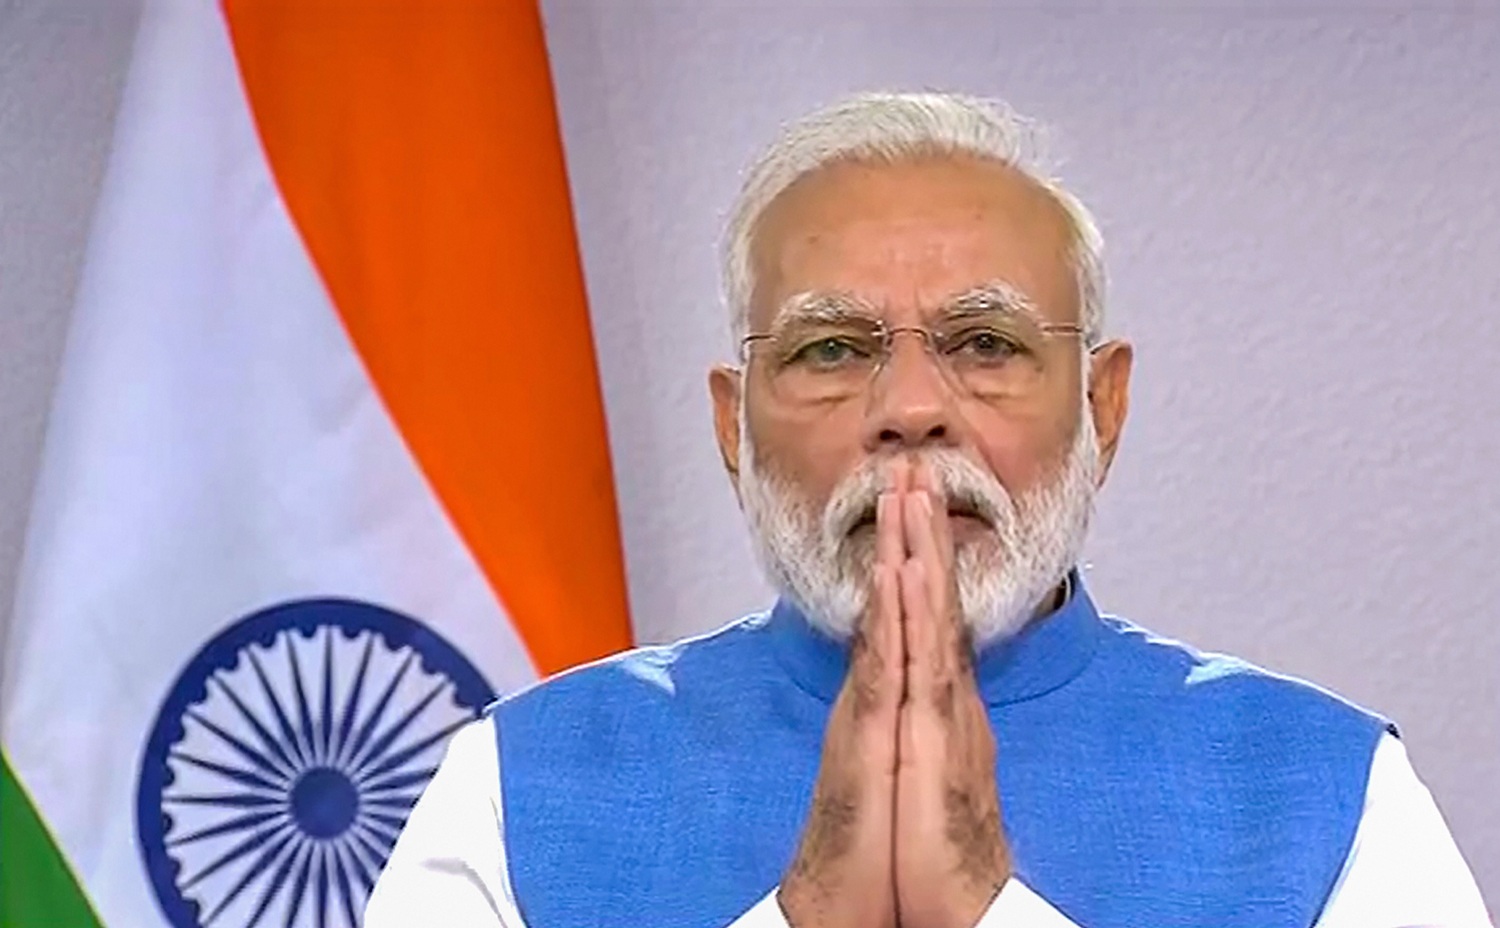 **EDS: VIDEO GRAB** New Delhi: Prime Minister Narendra Modi gestures during his address to the nation on coronavirus pandemic in New Delhi, Thursday, March 19, 2020. (PTI Photo)(PTI19-03-2020_000207B)